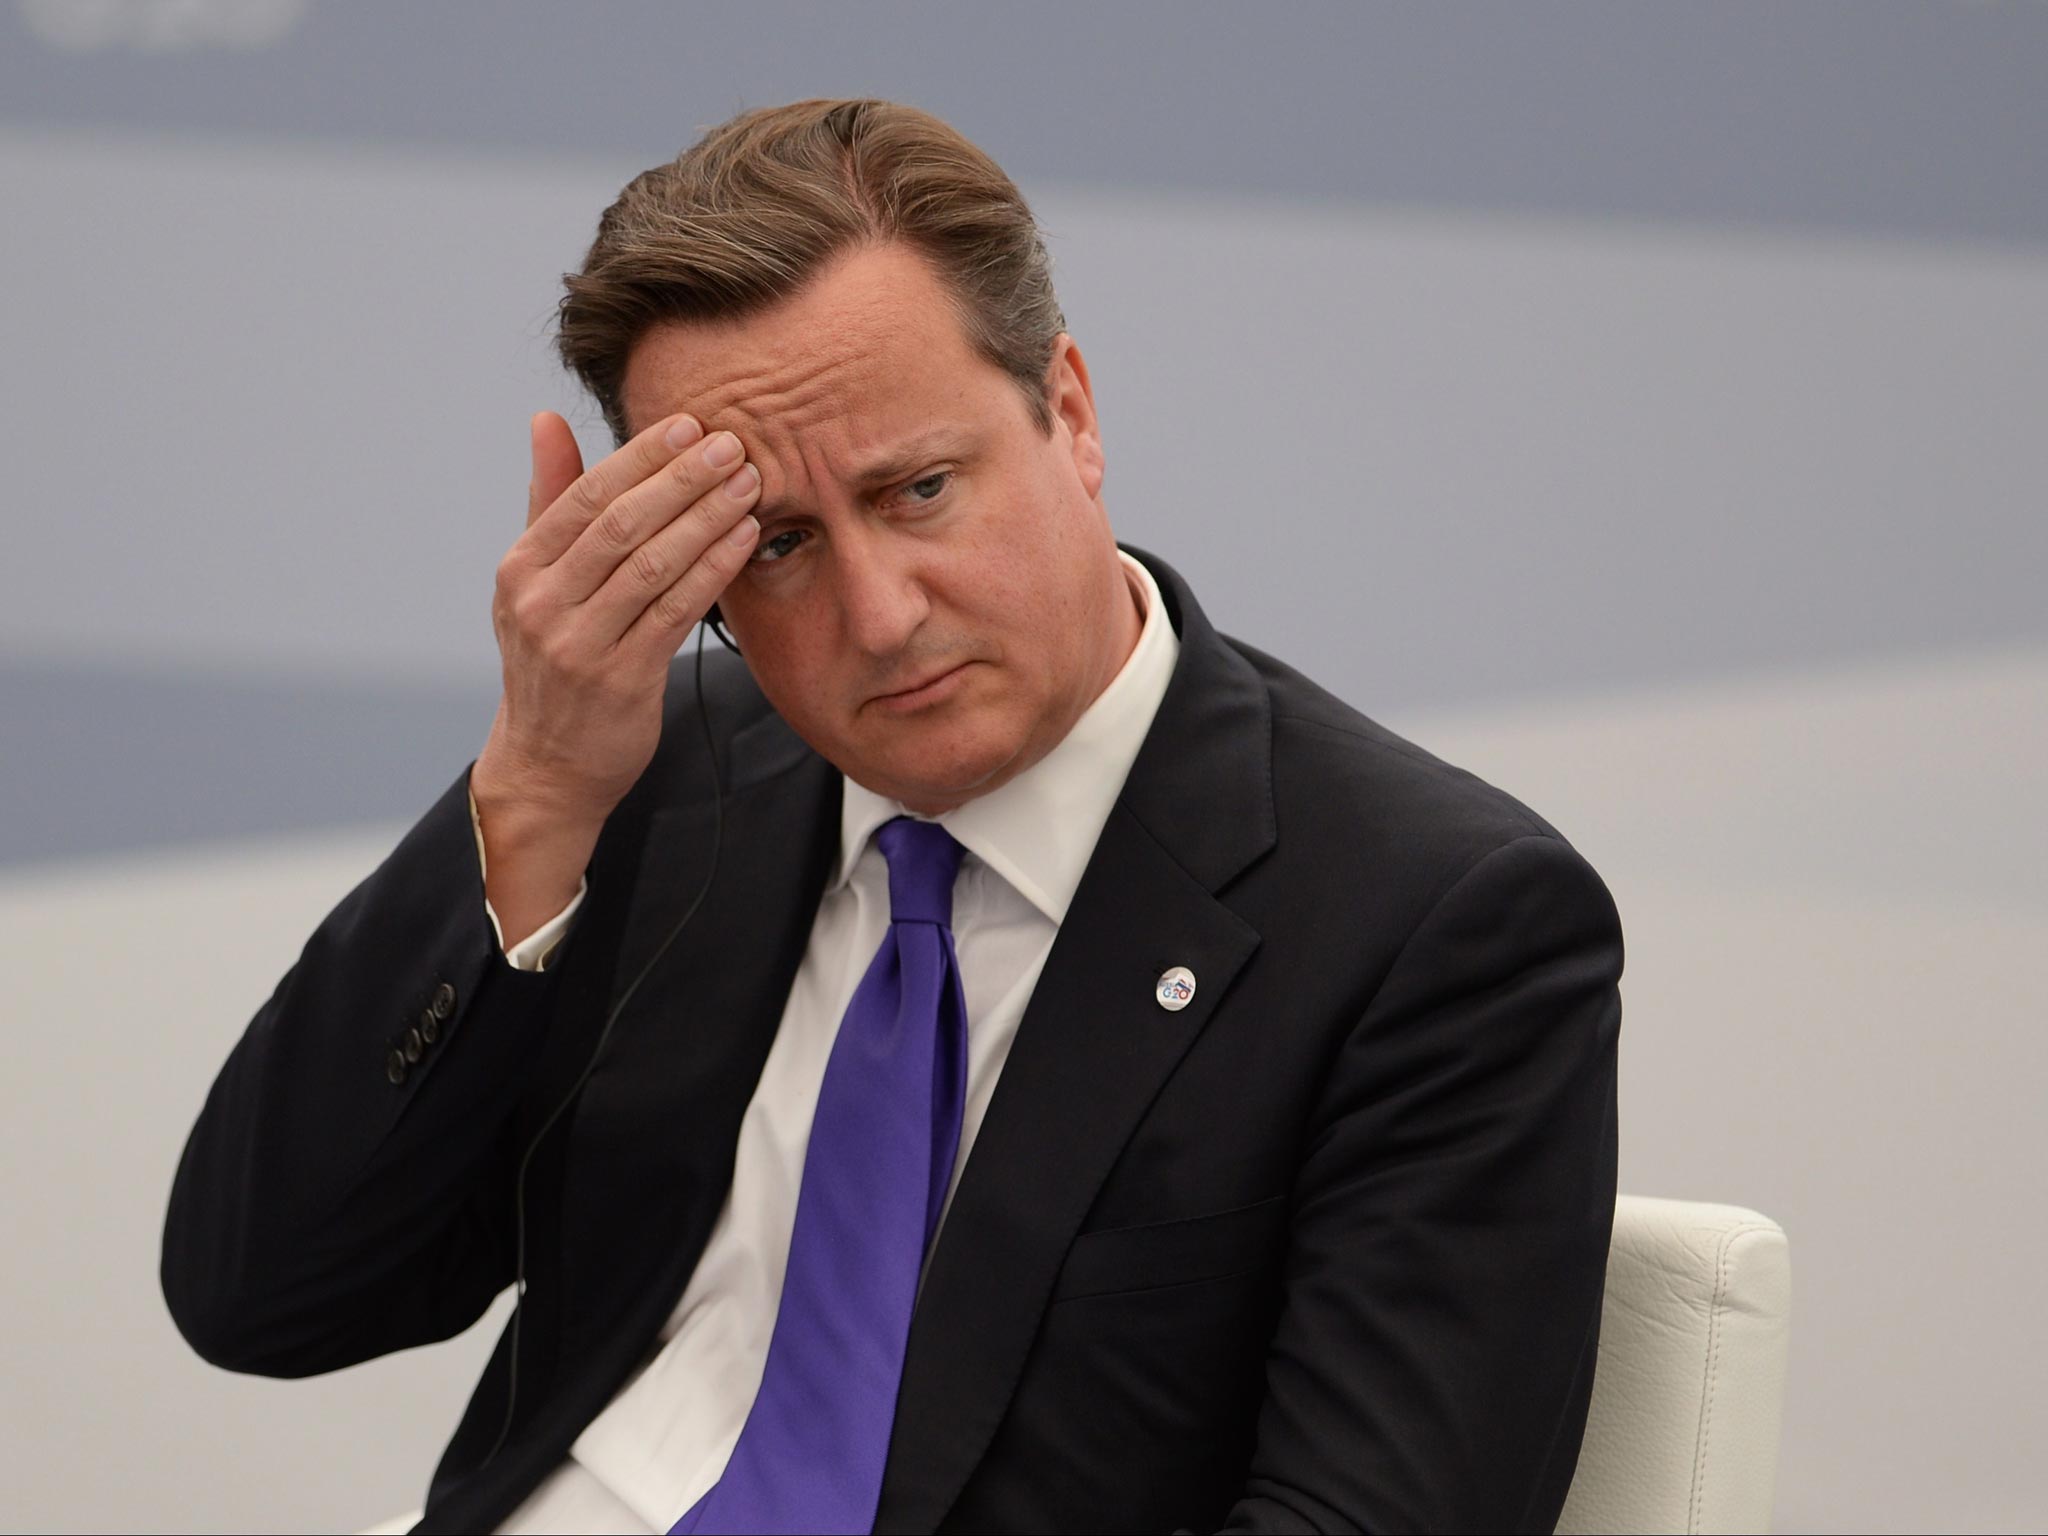 British Prime Minister David Cameron seems exasperated and irritated about Vladimir Putin's supposed snub